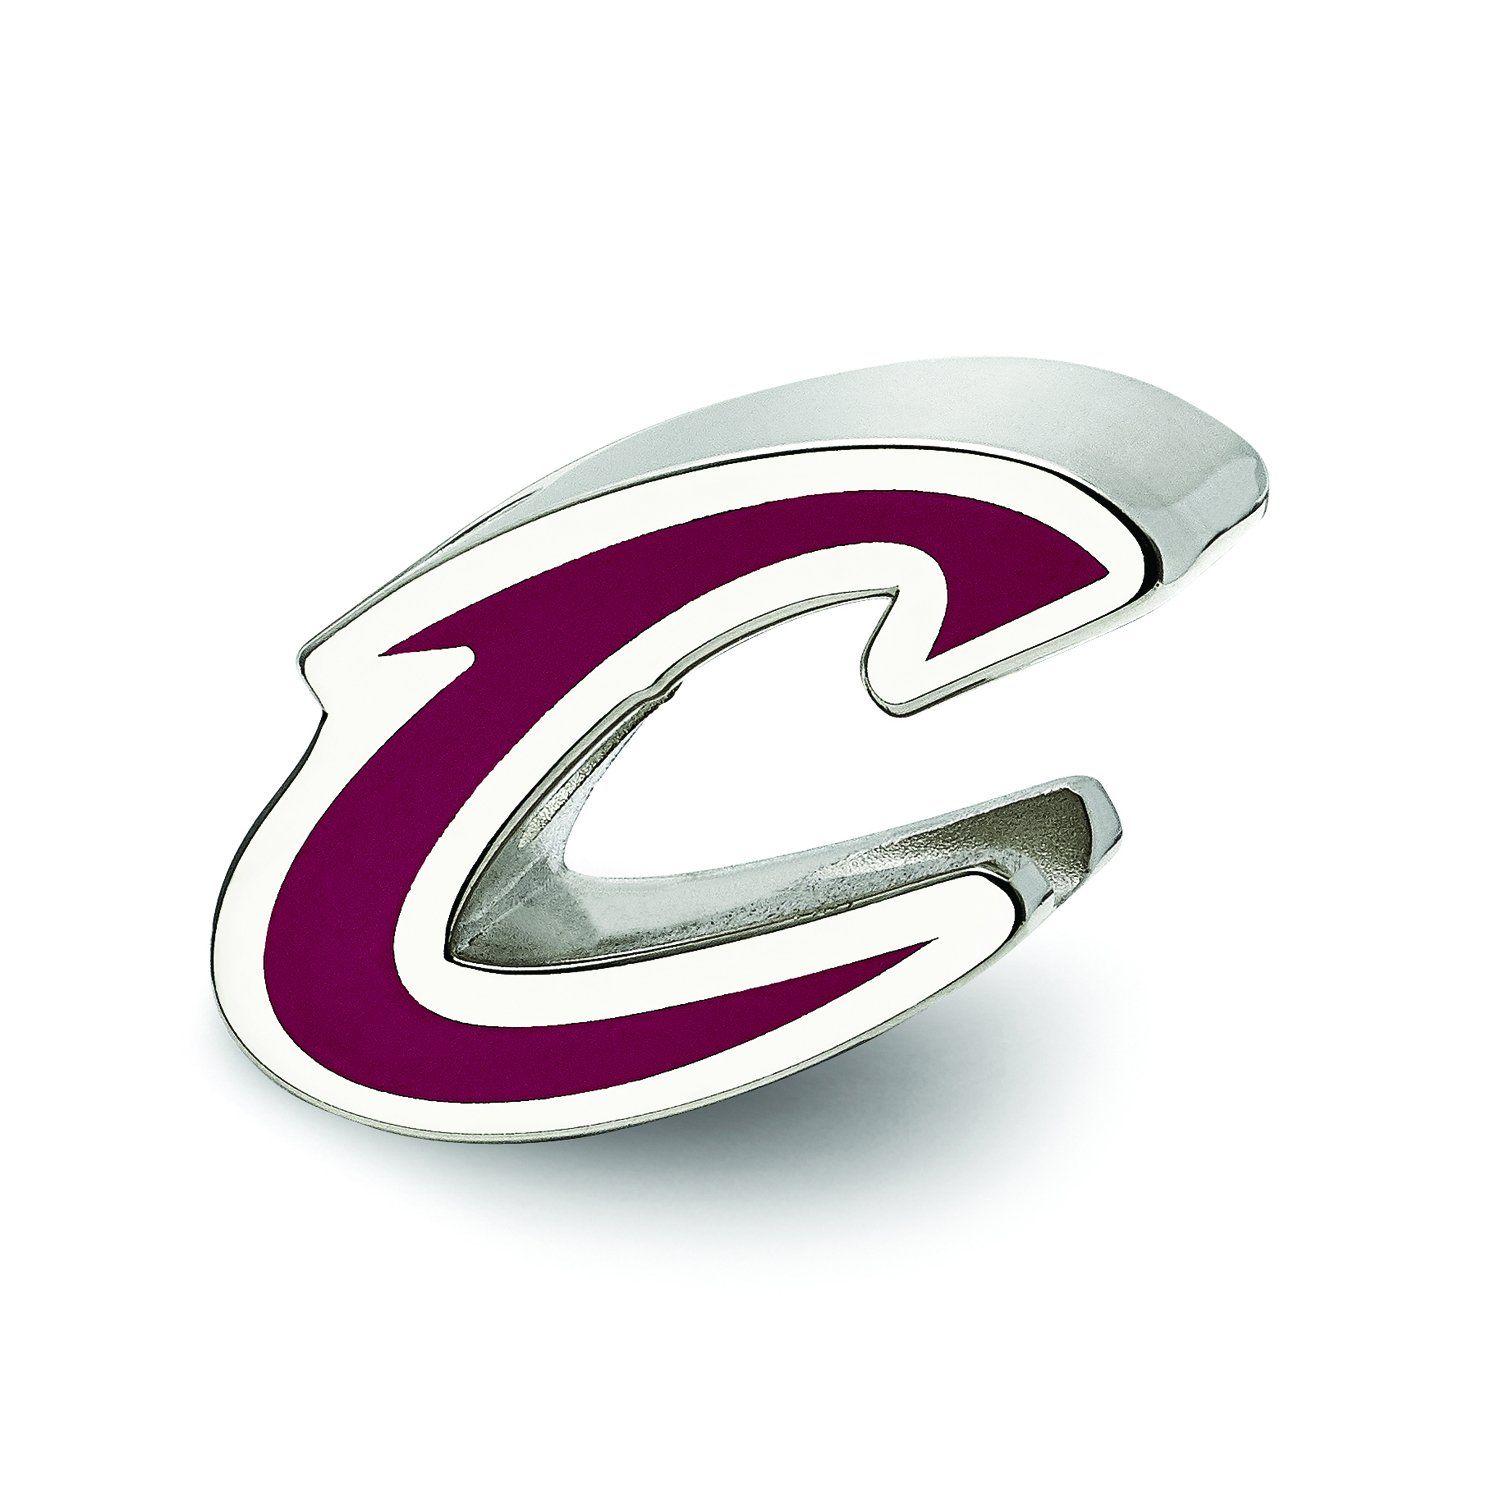 Cavs C Logo - Amazon.com: LogoArt Sterling Silver Cleveland Cavaliers C Logo ...